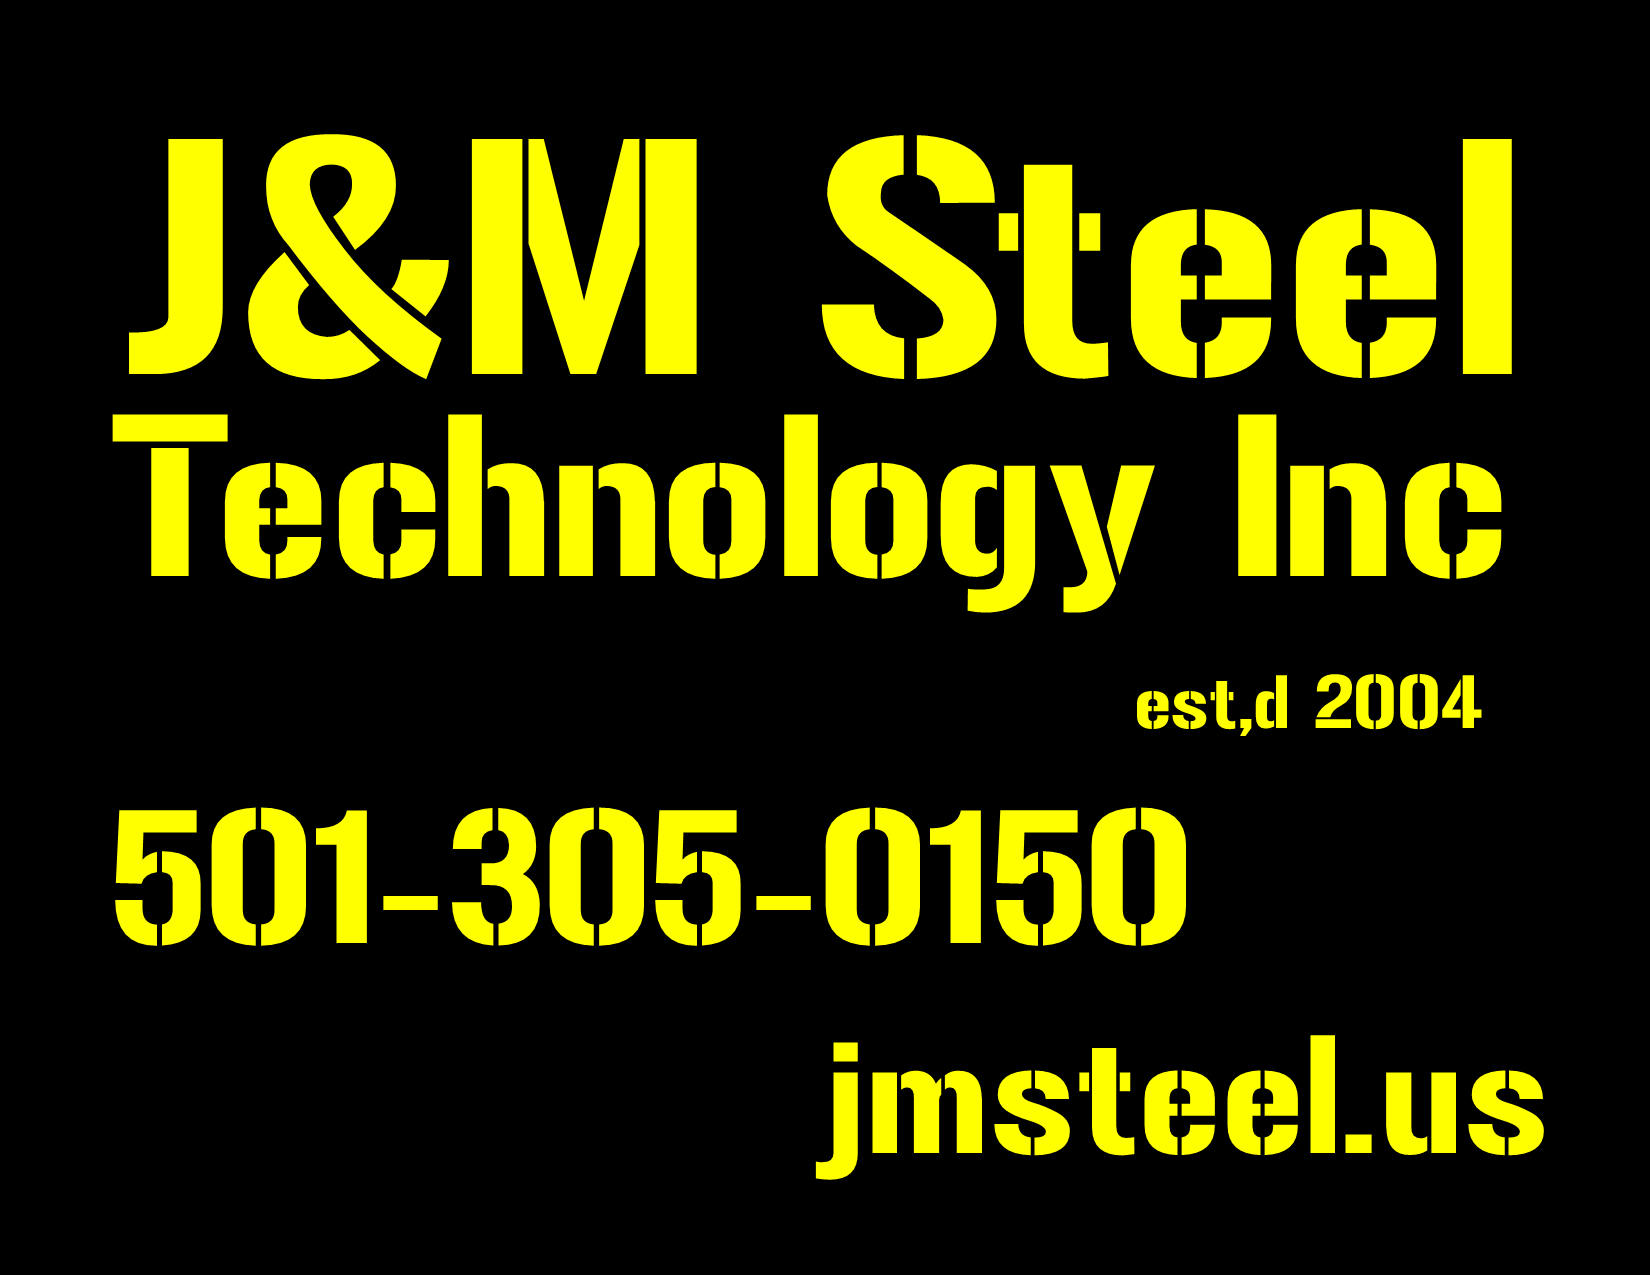 J & M Steel Technology Inc